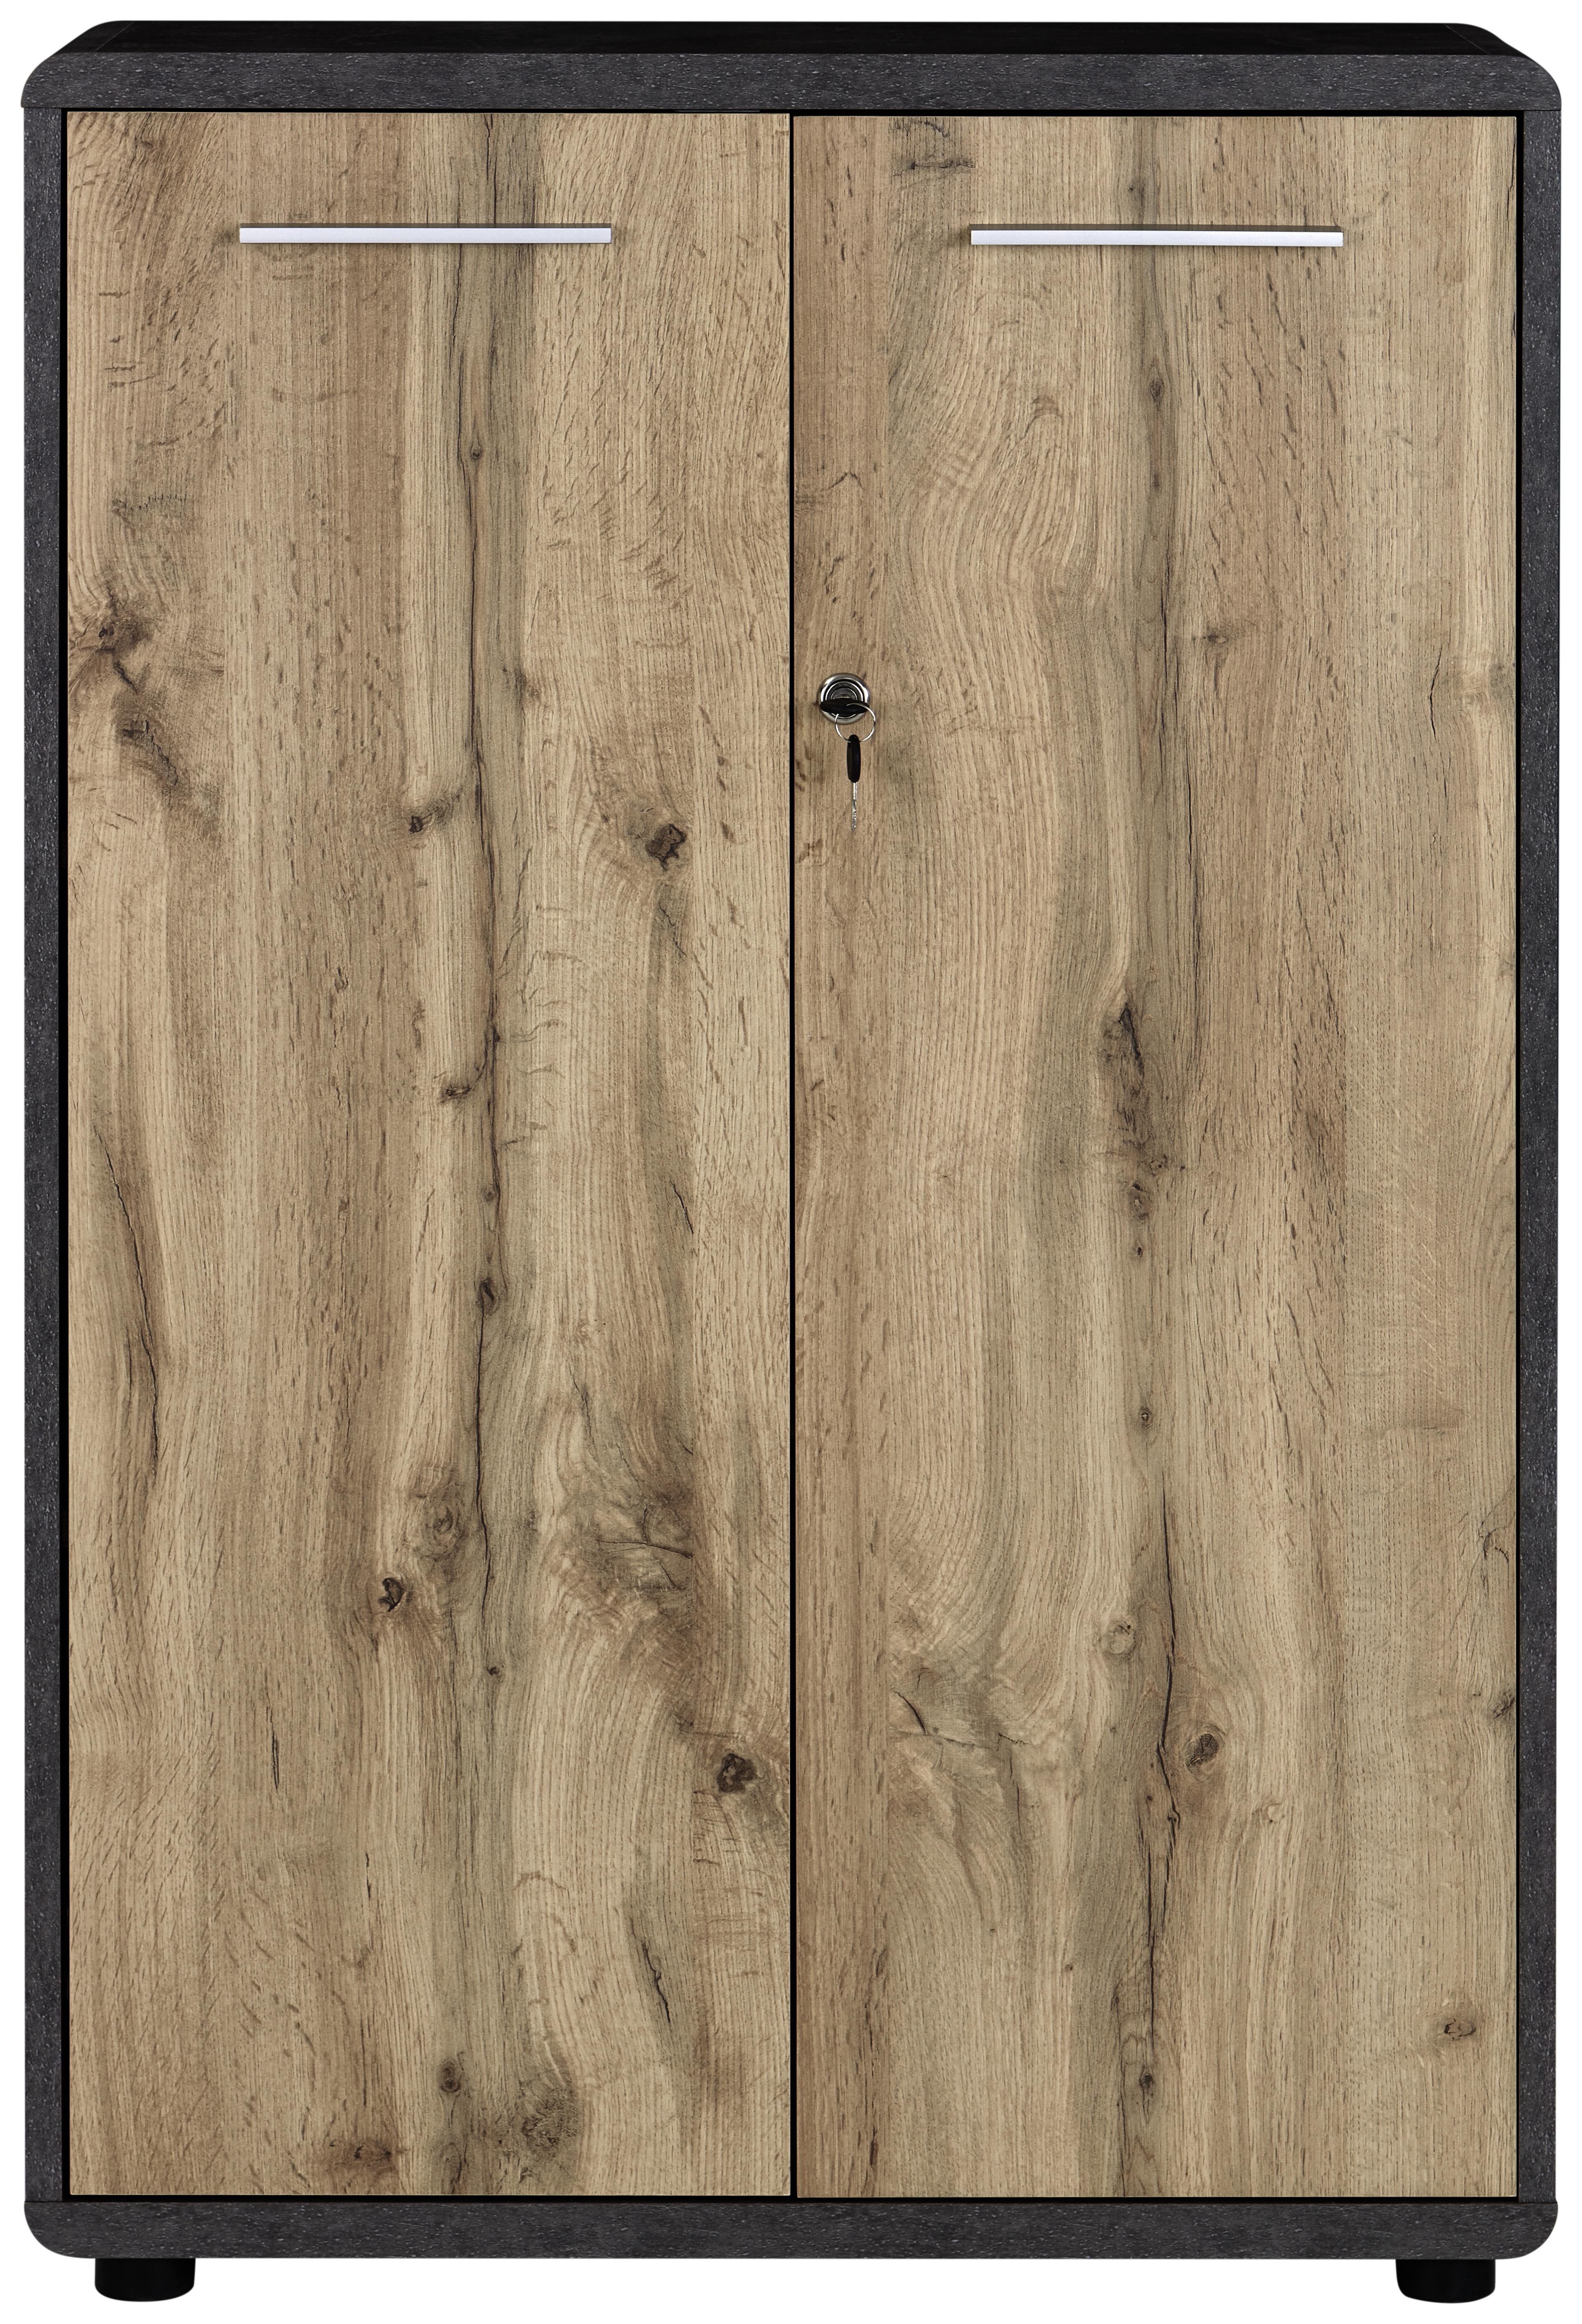 Pisarniška Omara Fontana Fts02 - temno siva/hrast, Moderno, leseni material (75/113,1/35cm) - Modern Living